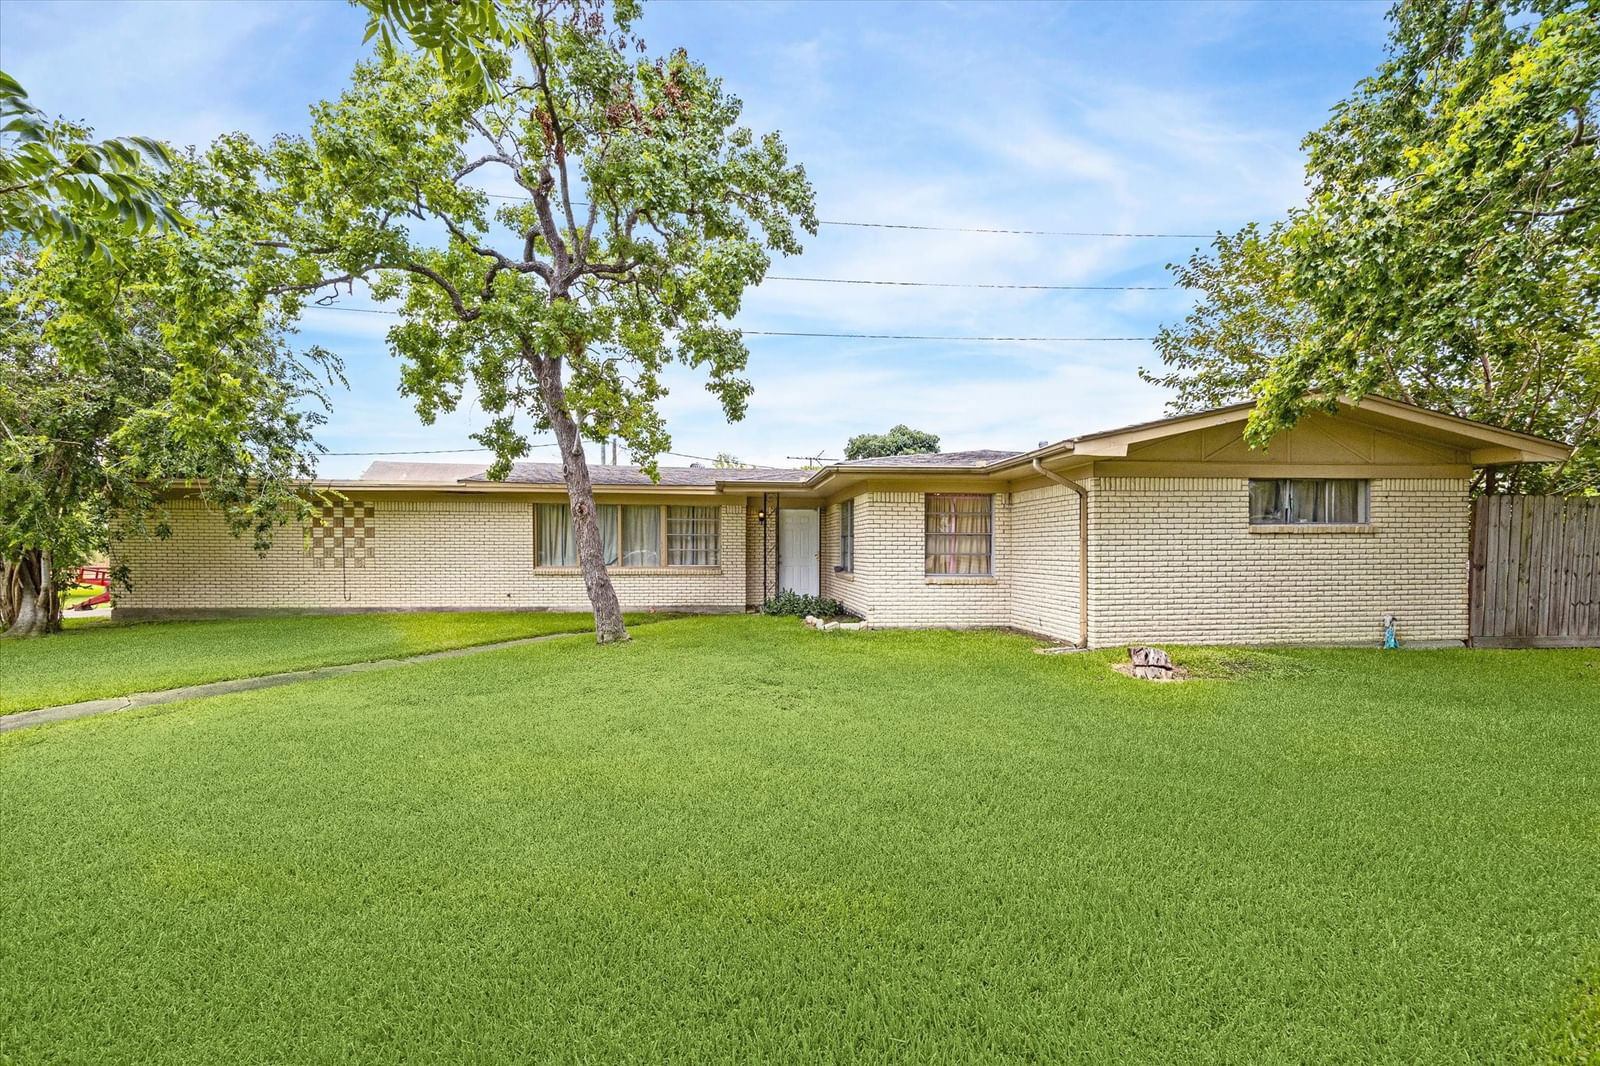 Real estate property located at 200 Brownwood, Harris, Brownwood, Baytown, TX, US